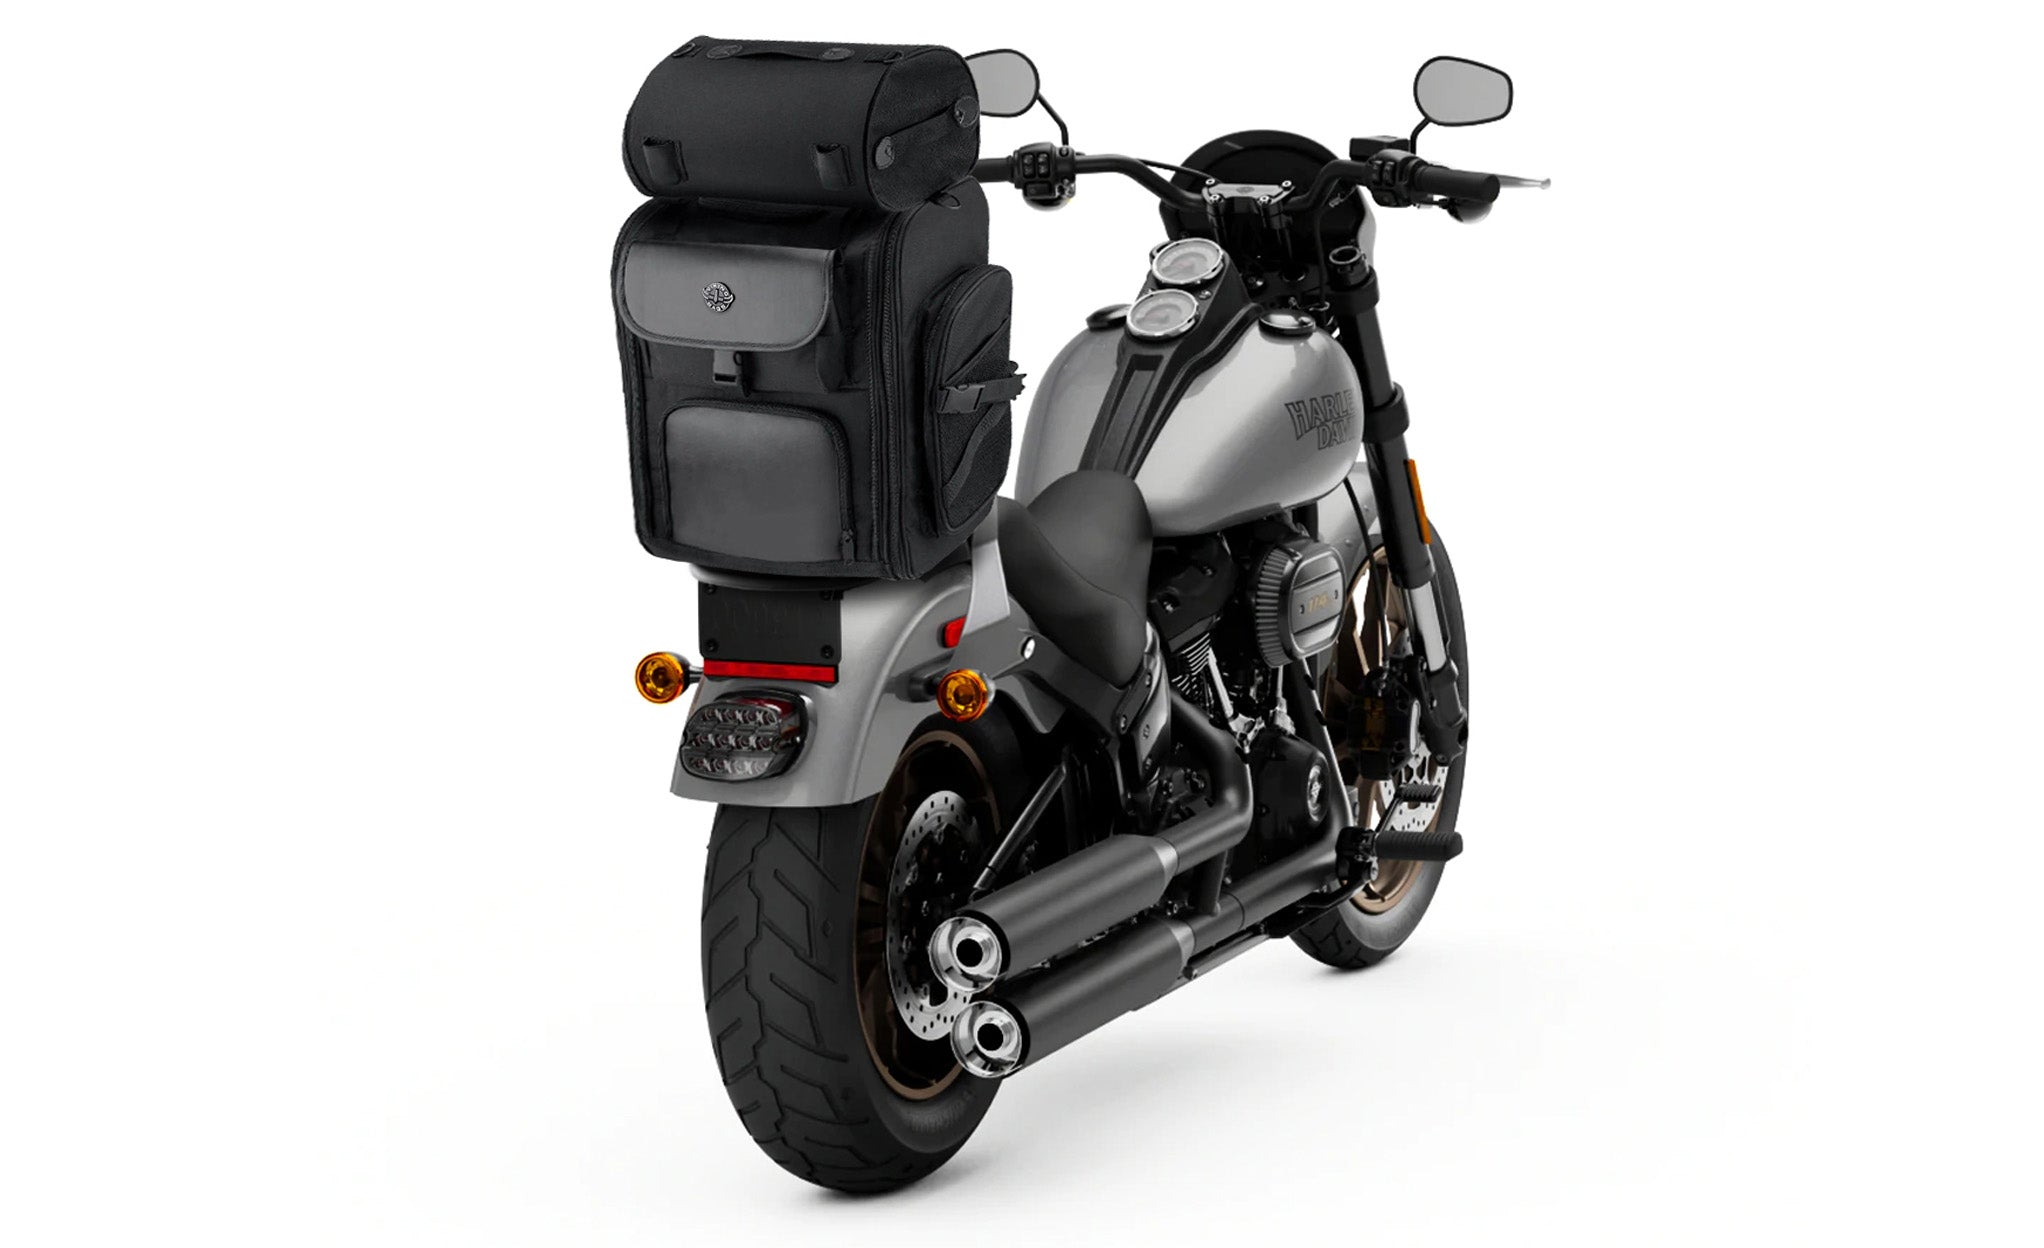 Viking Dwarf Medium Honda Motorcycle Sissy Bar Bag Bag on Bike View @expand